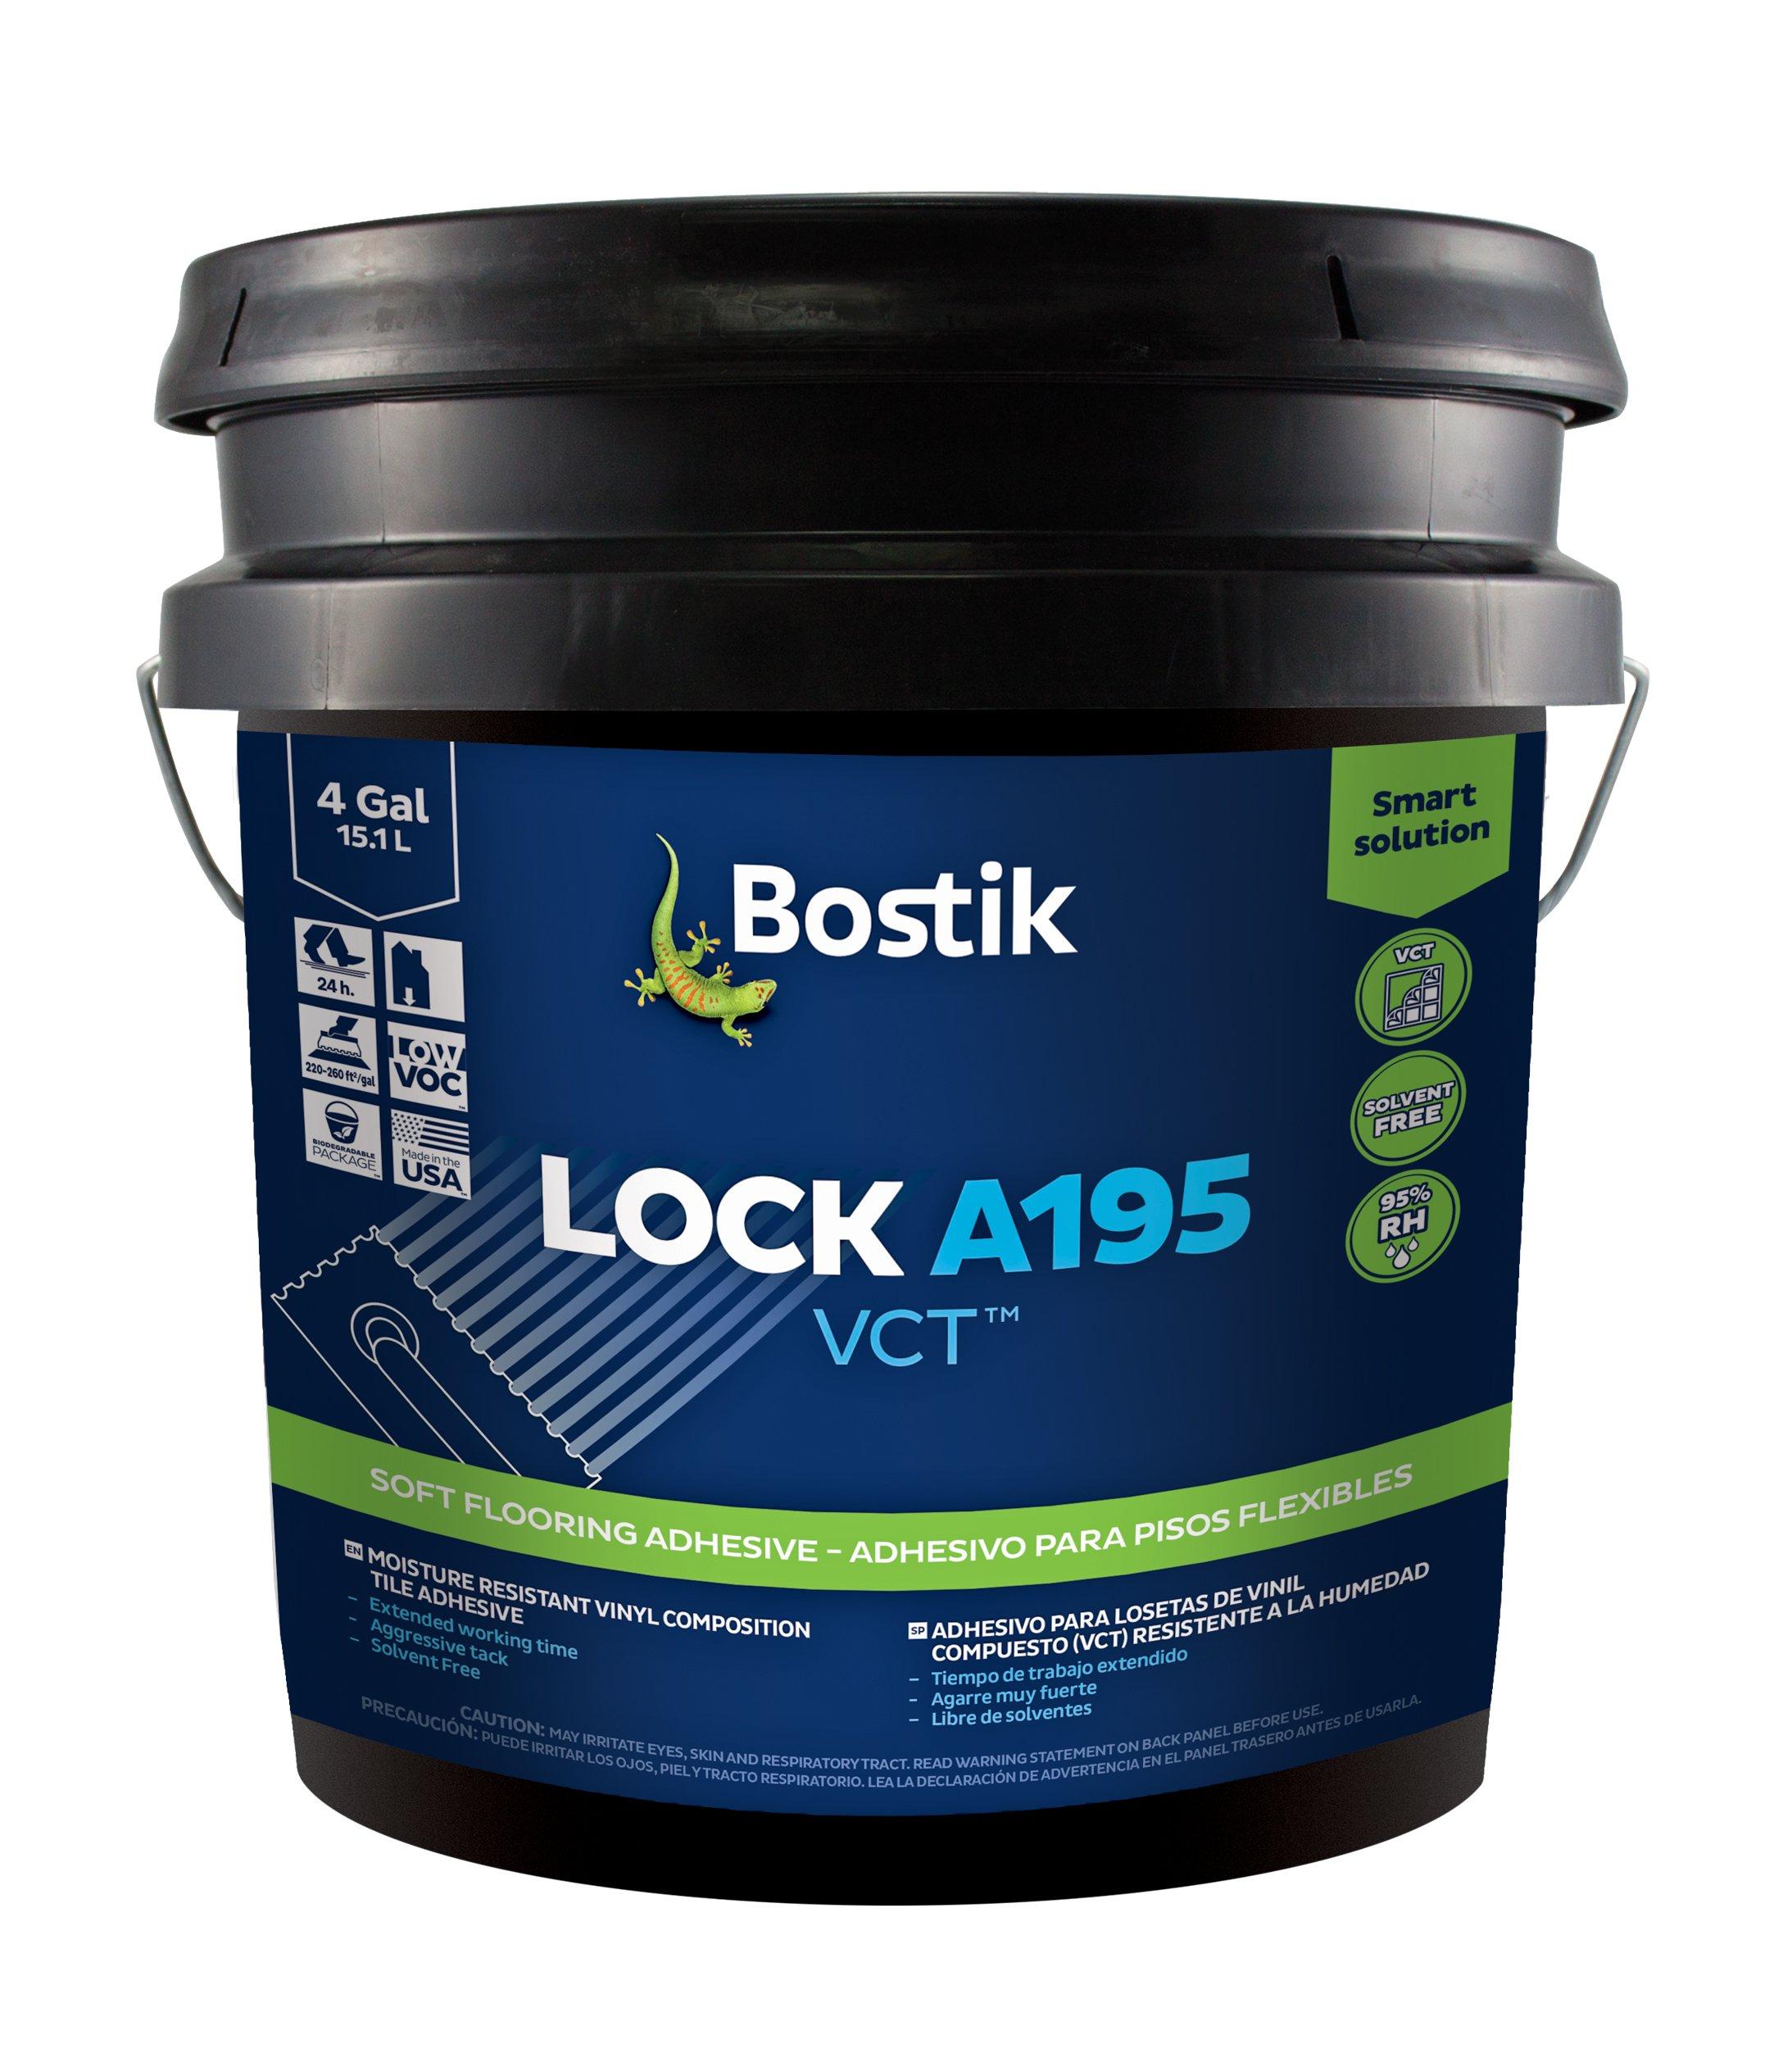 Bostik Lock A195 VCT Hardwood Flooring Adhesive